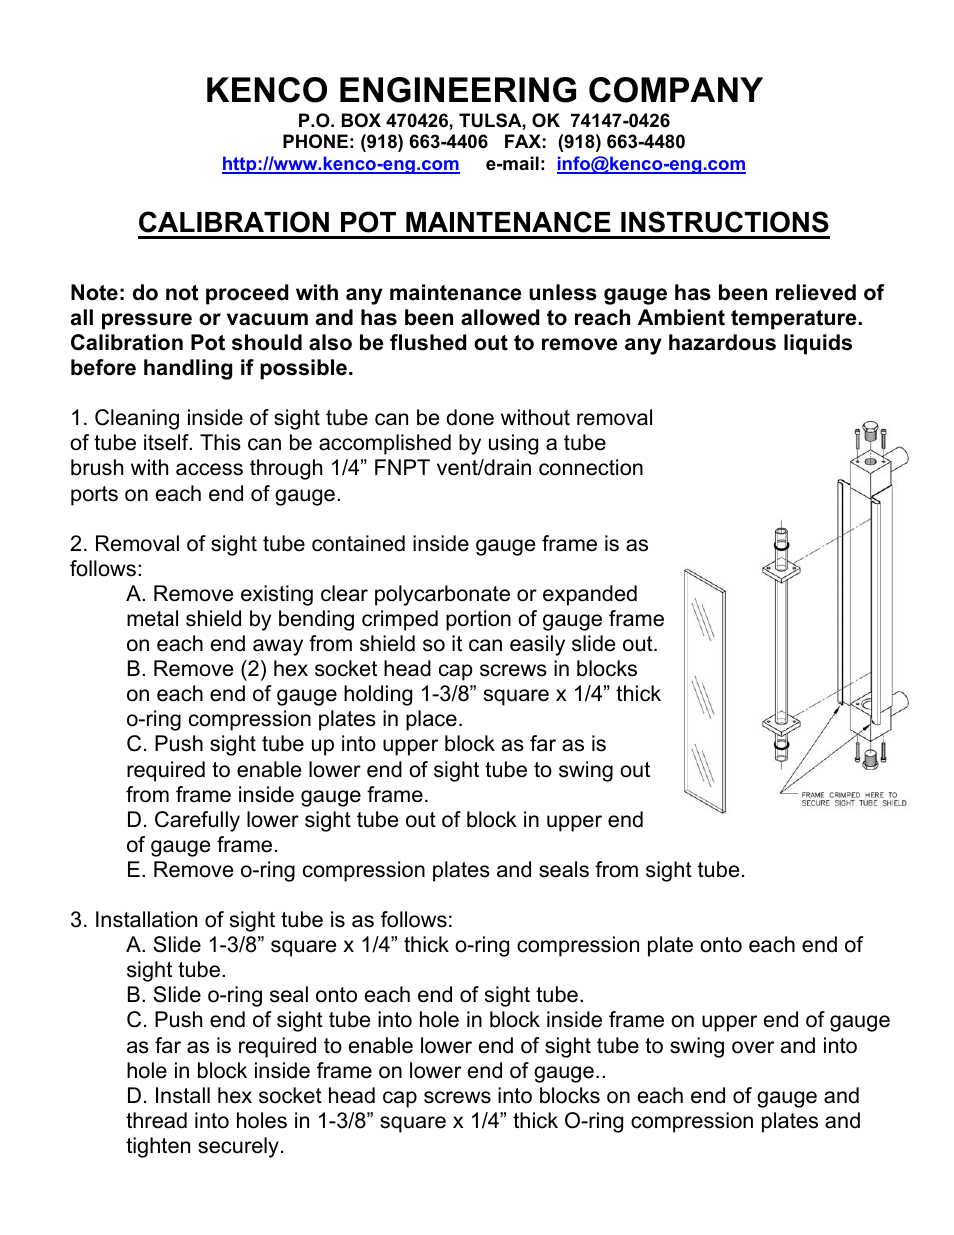 Calibration Pot Maintenance